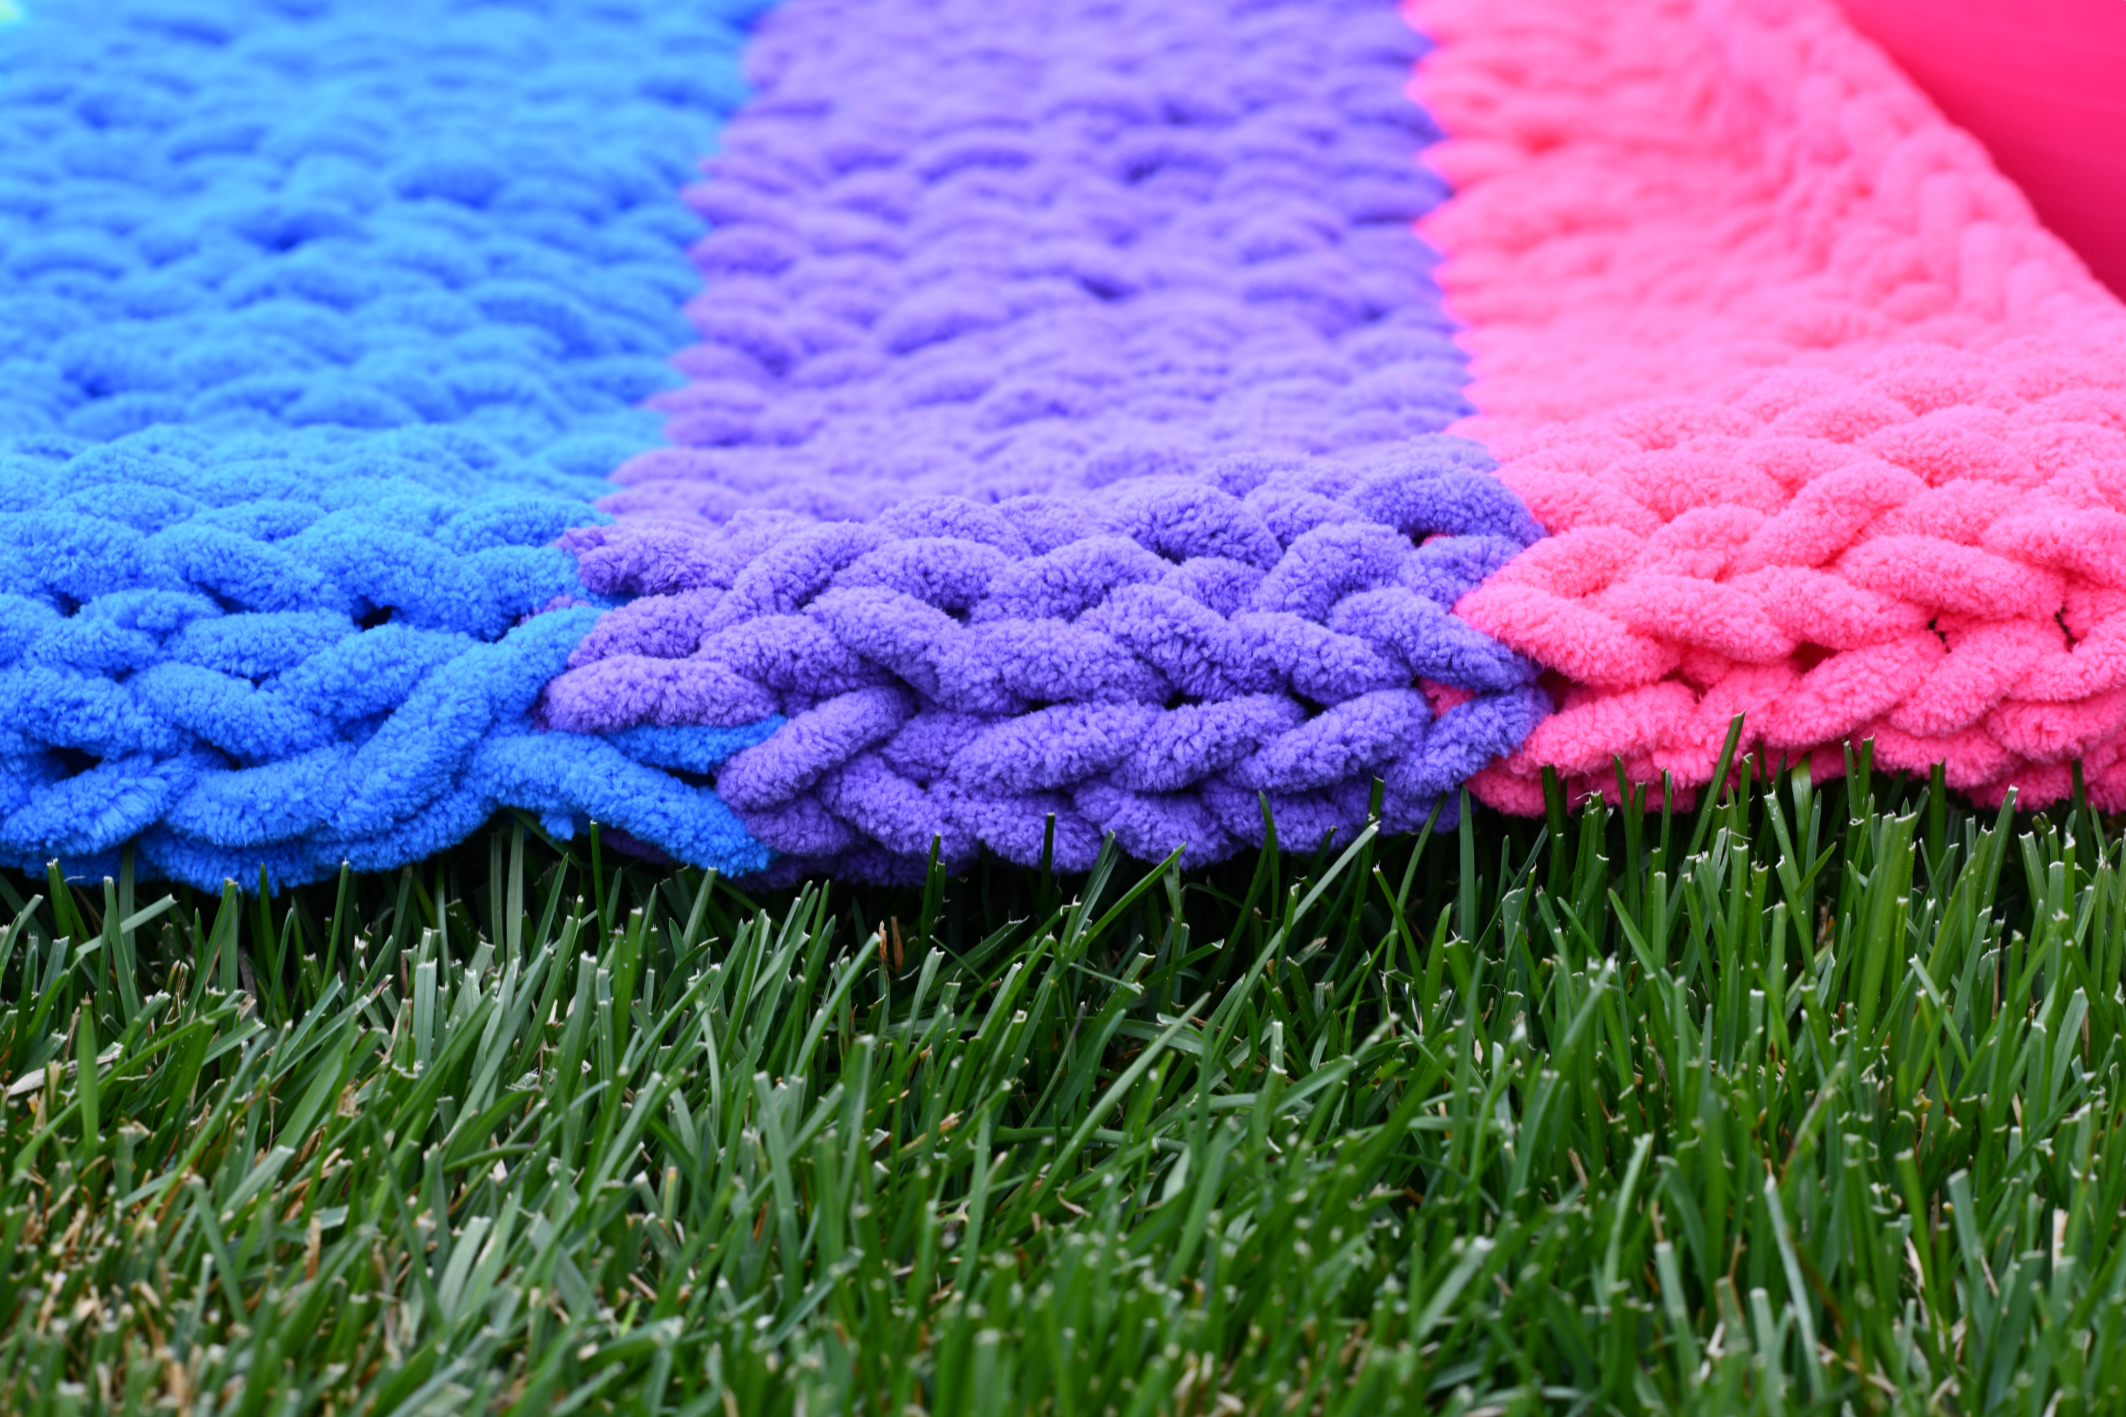 Rainbow Loop Yarn Blanket